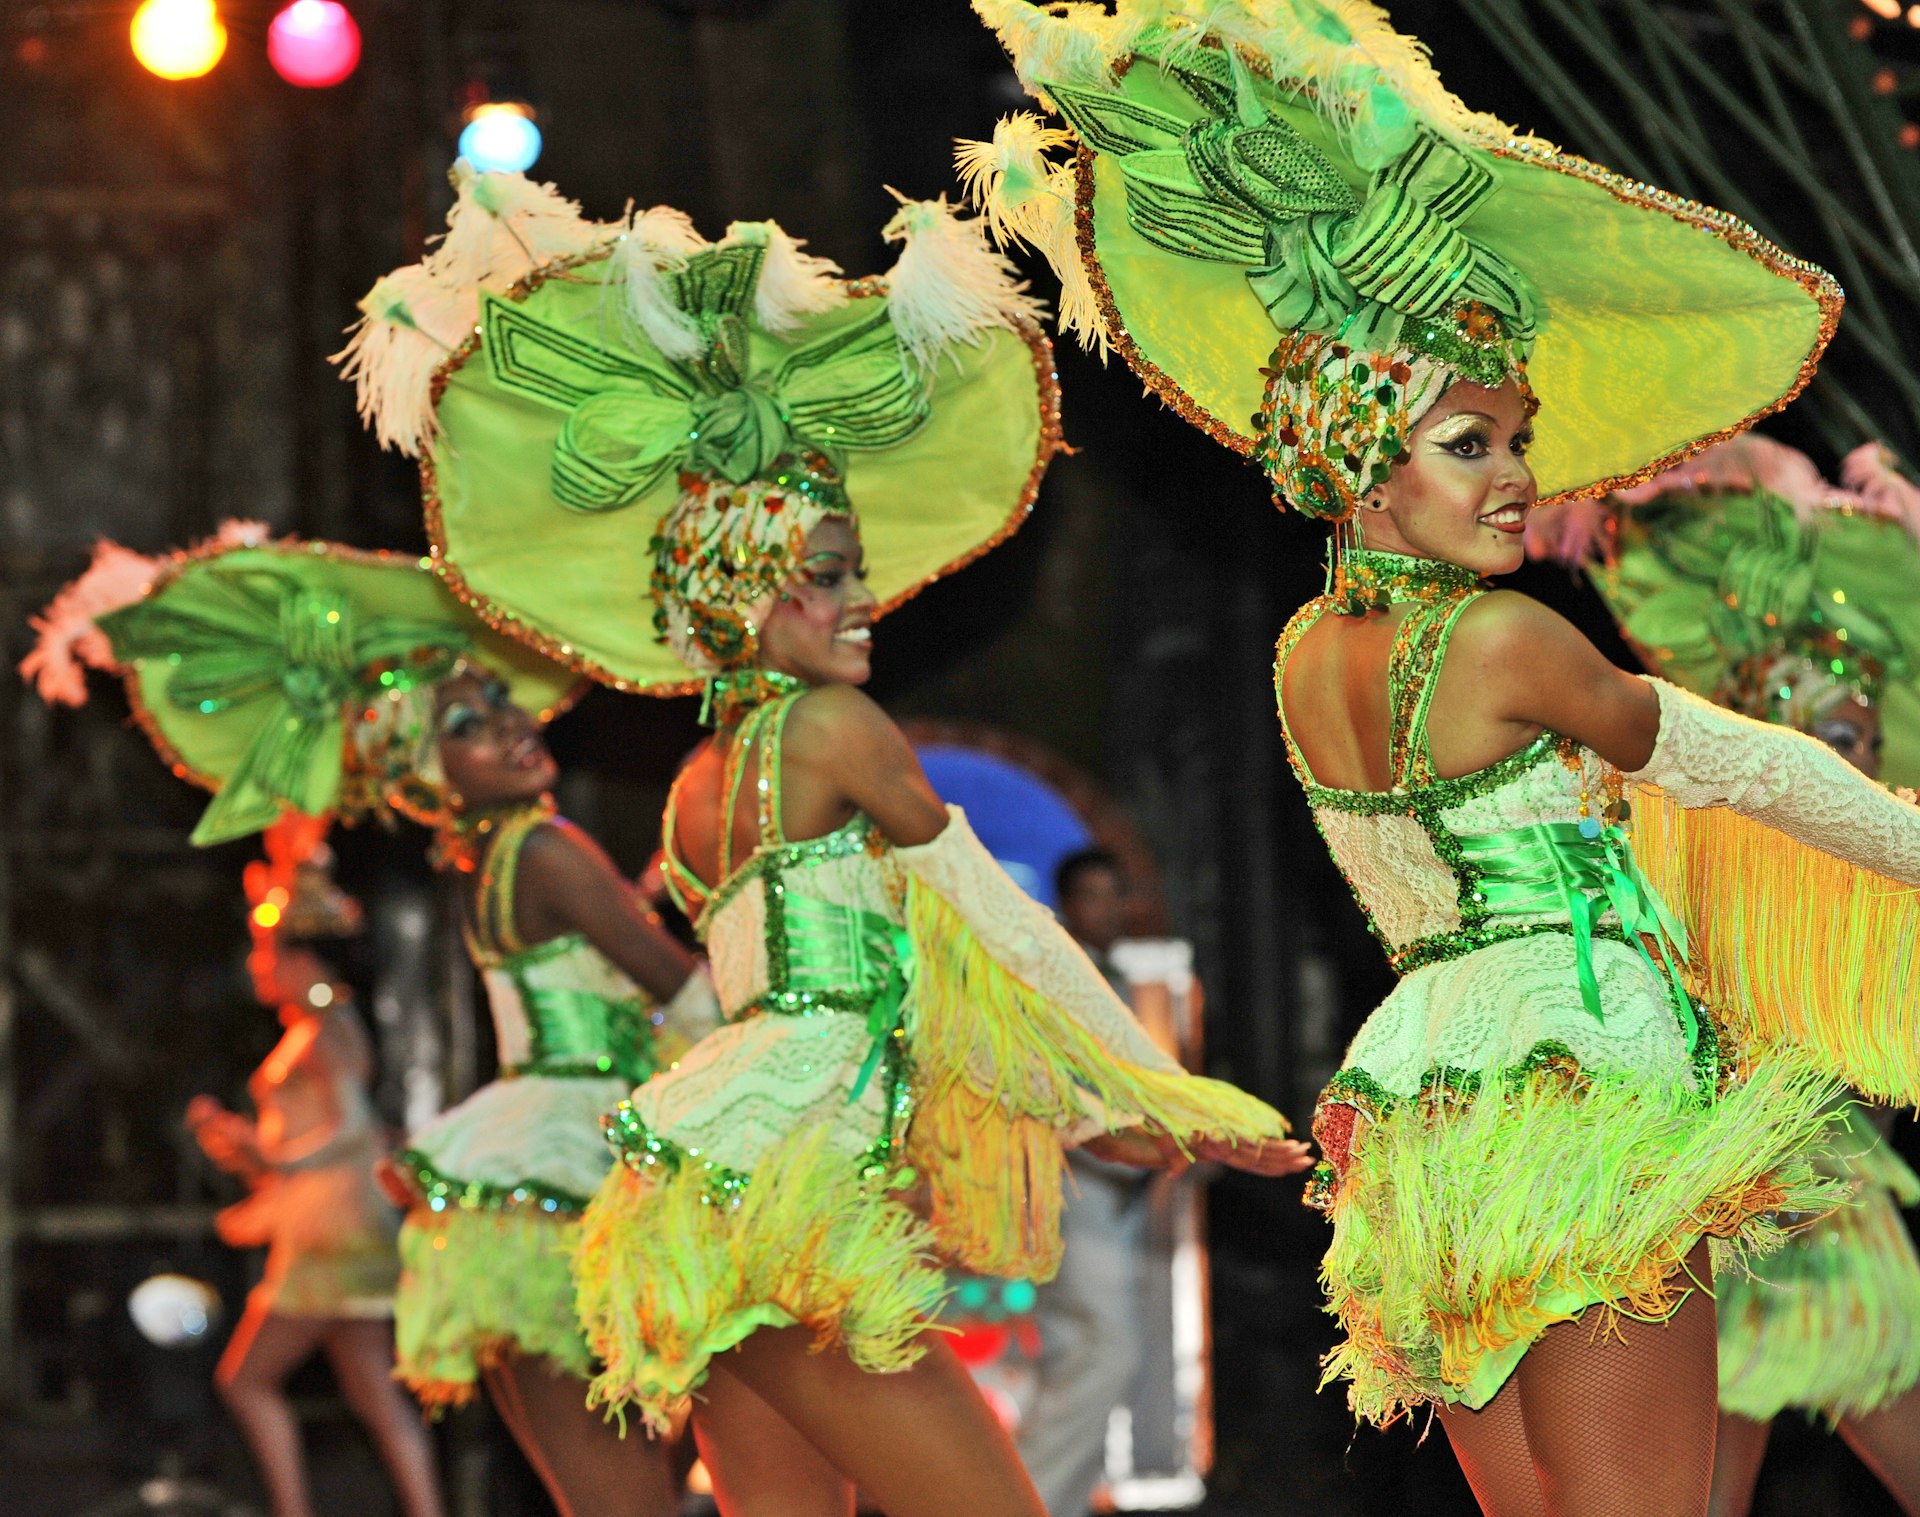 Dancers performing in Tropicana for a cabaret show in Havana, Cuba